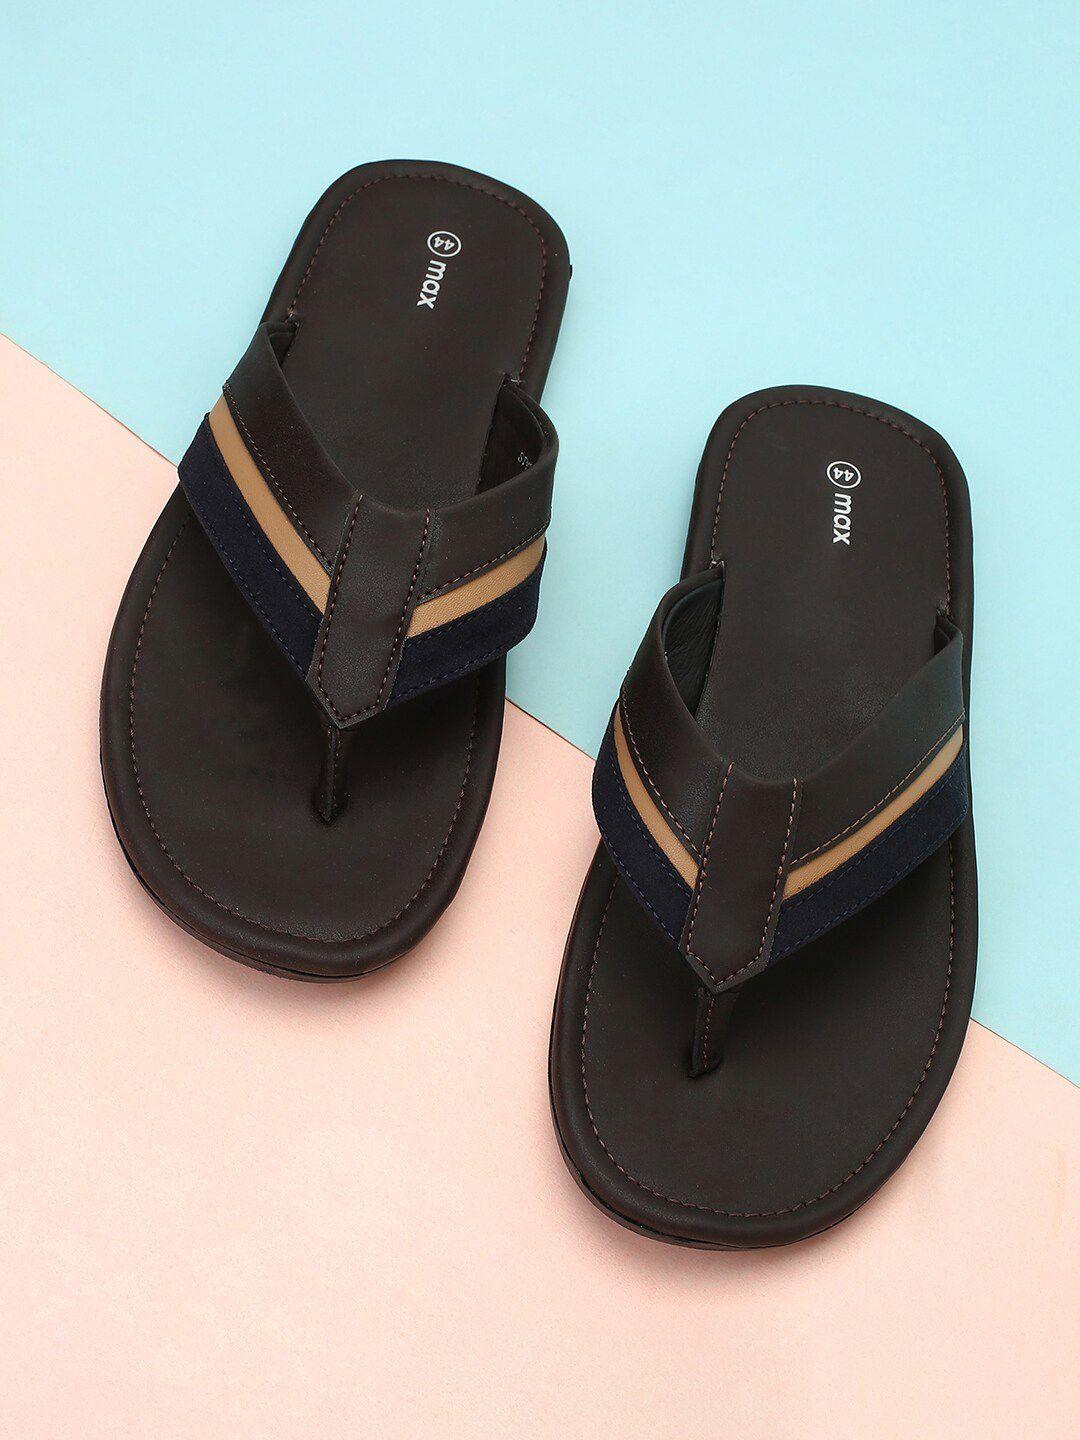 max-men-open-toe-comfort-sandals